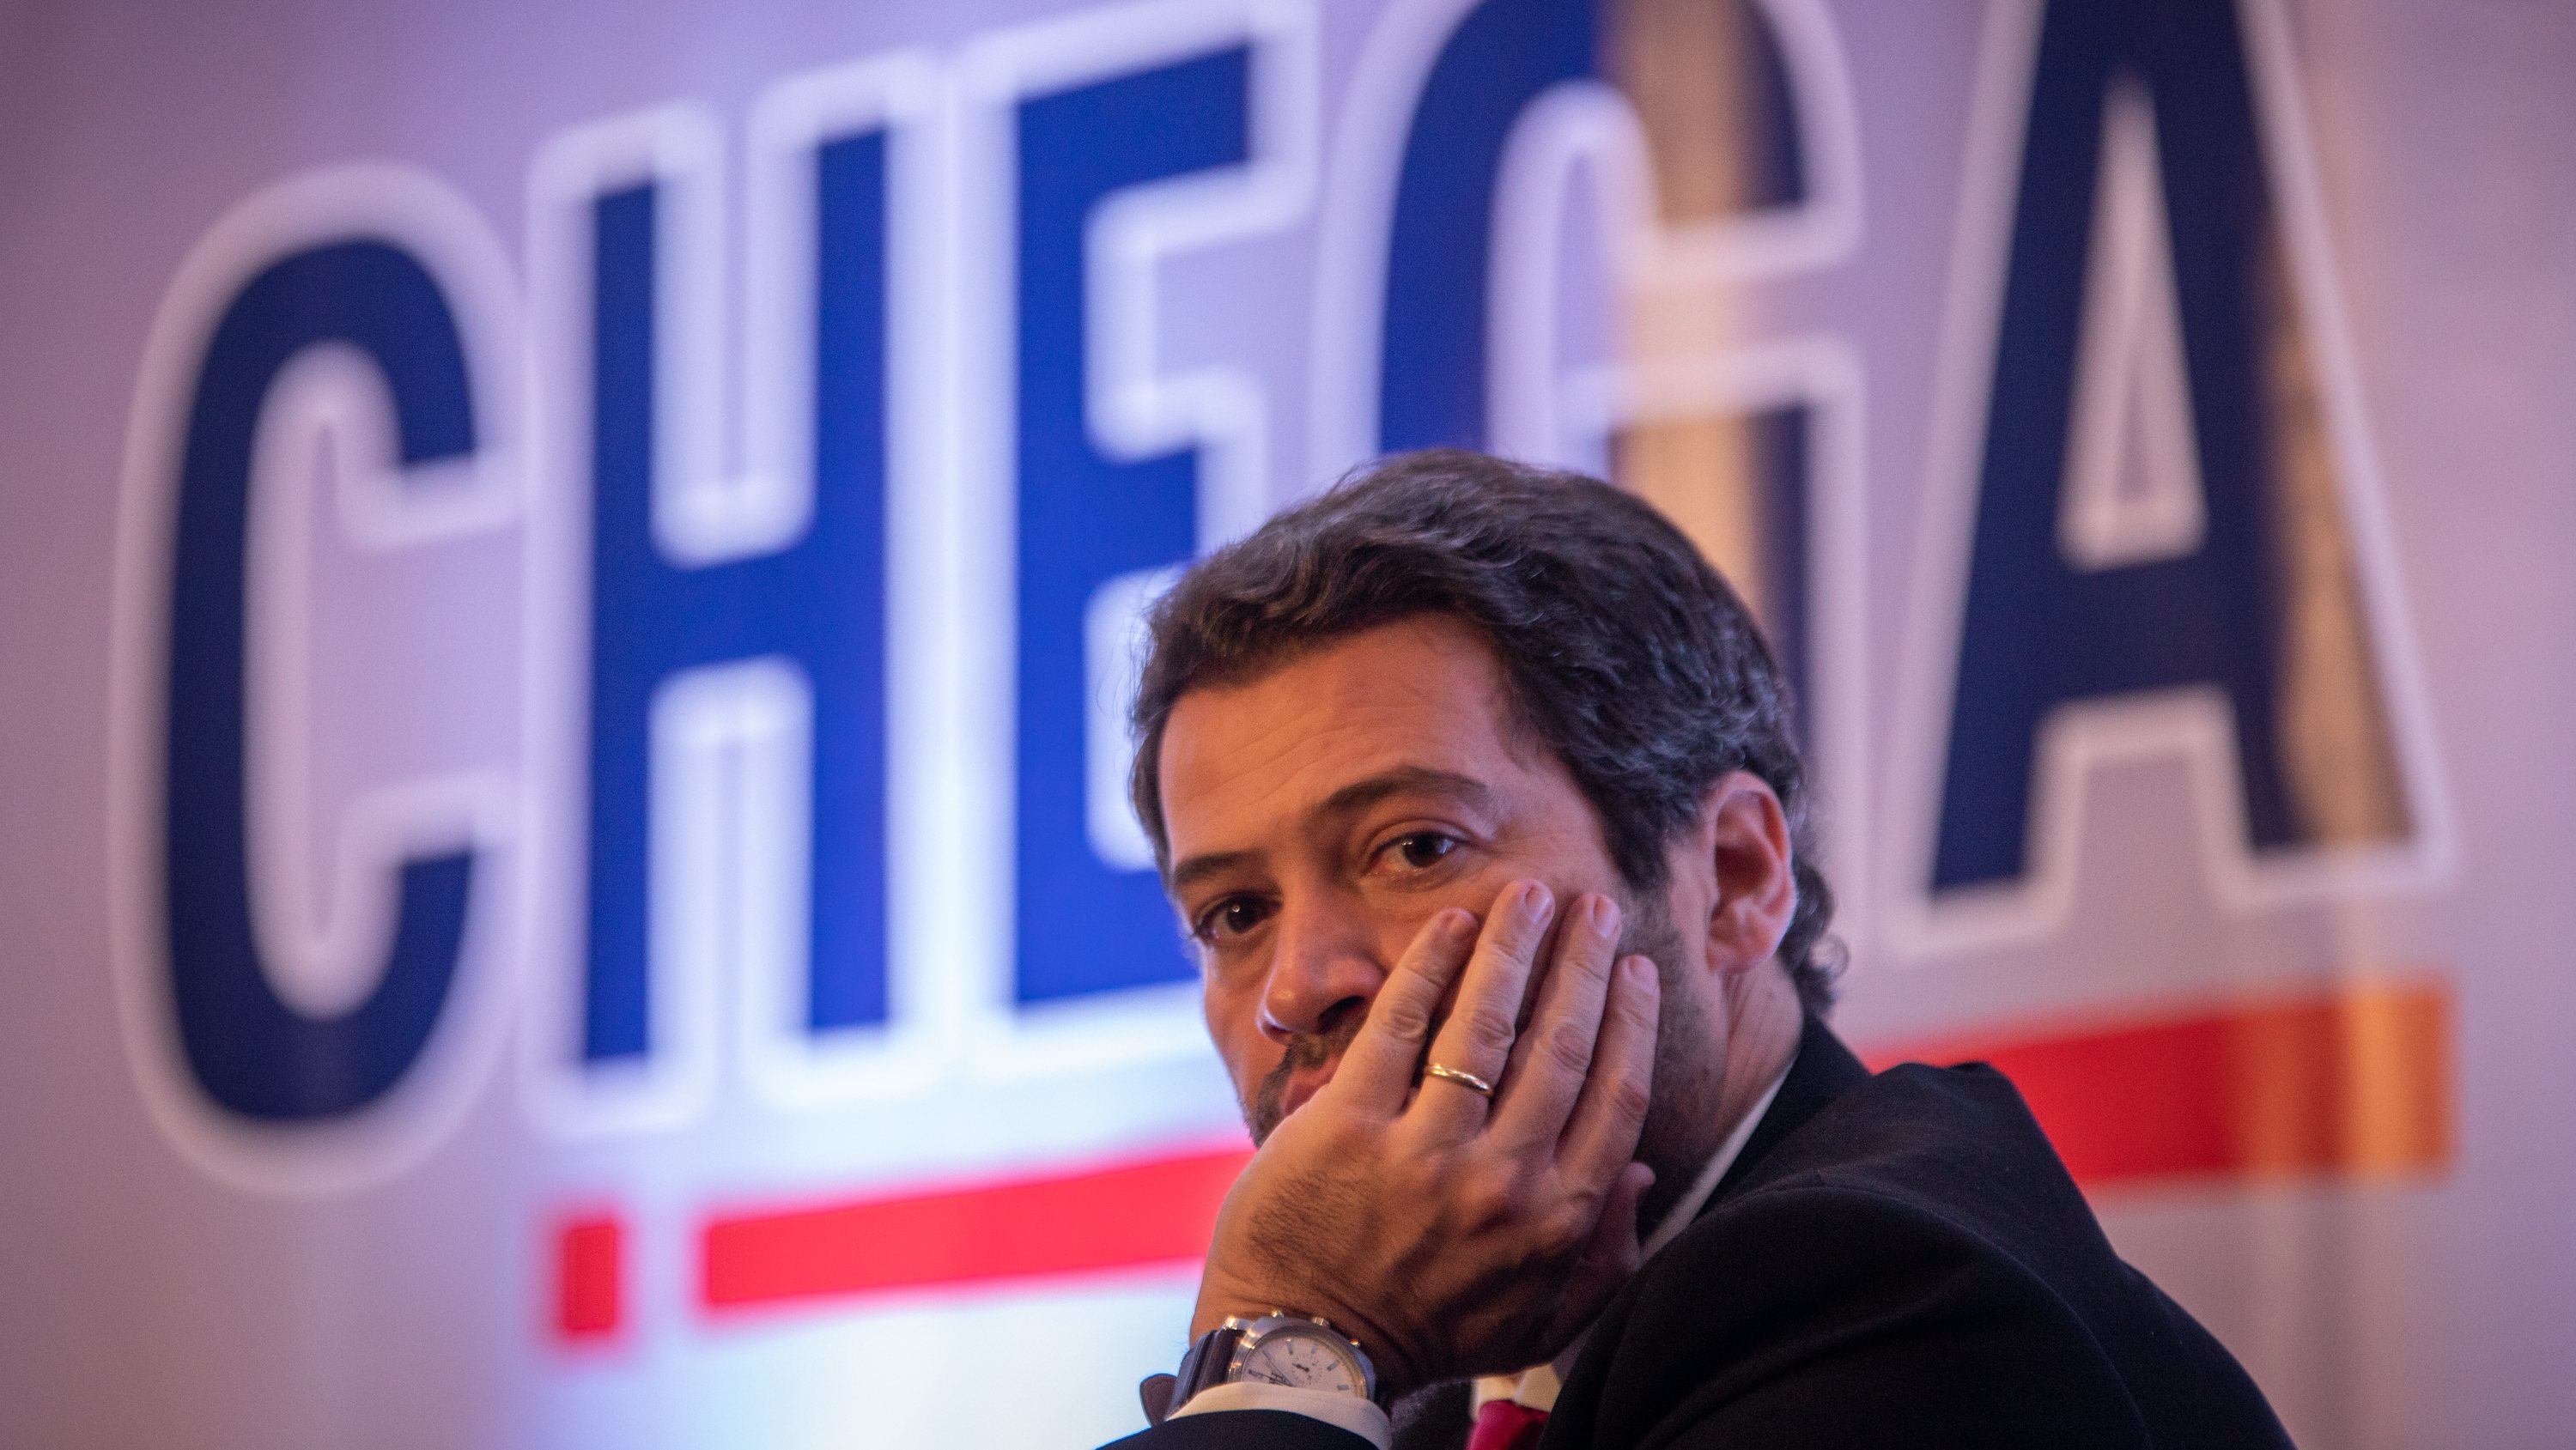 CONGRESSO DO CHEGA: André Ventura, líder do partido CHEGA, no 4º Congresso do Partido. 26 de Novembro de 2021, Viseu TOMÁS SILVA/OBSERVADOR